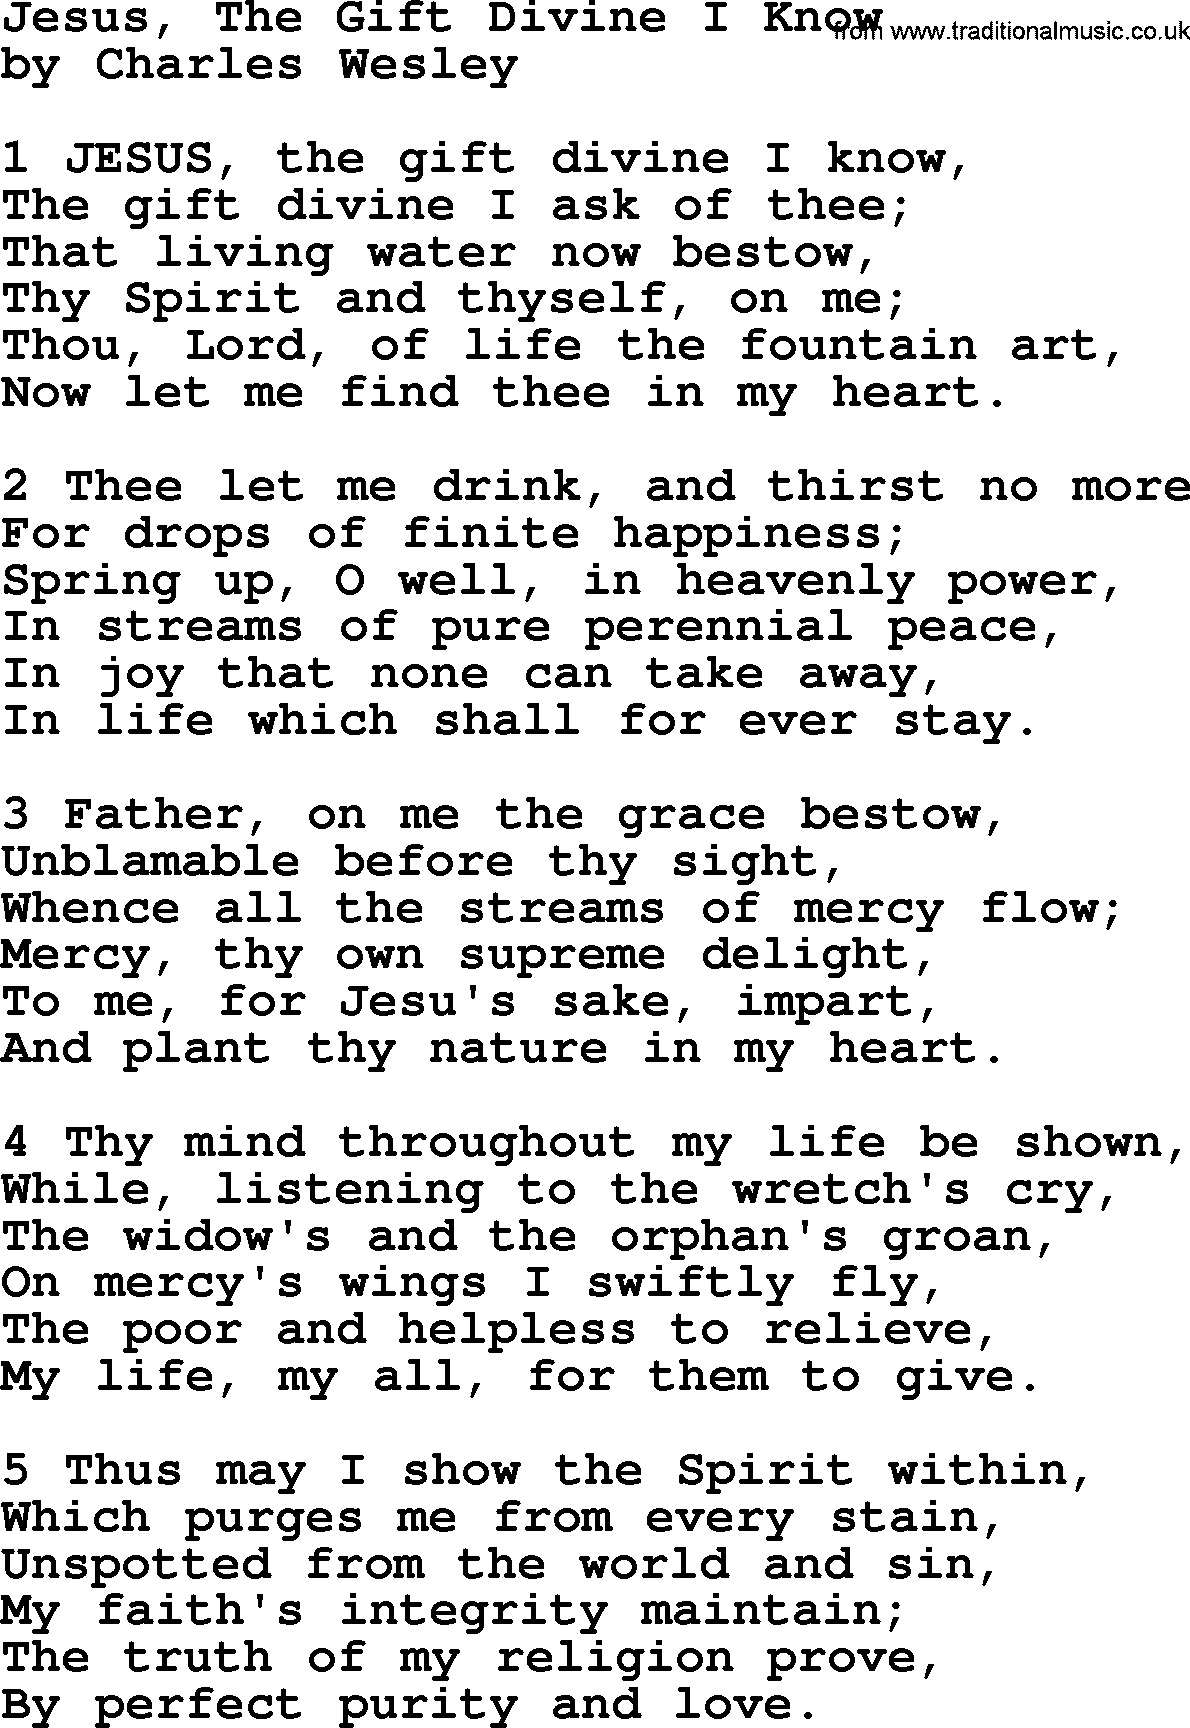 Charles Wesley hymn: Jesus, The Gift Divine I Know, lyrics